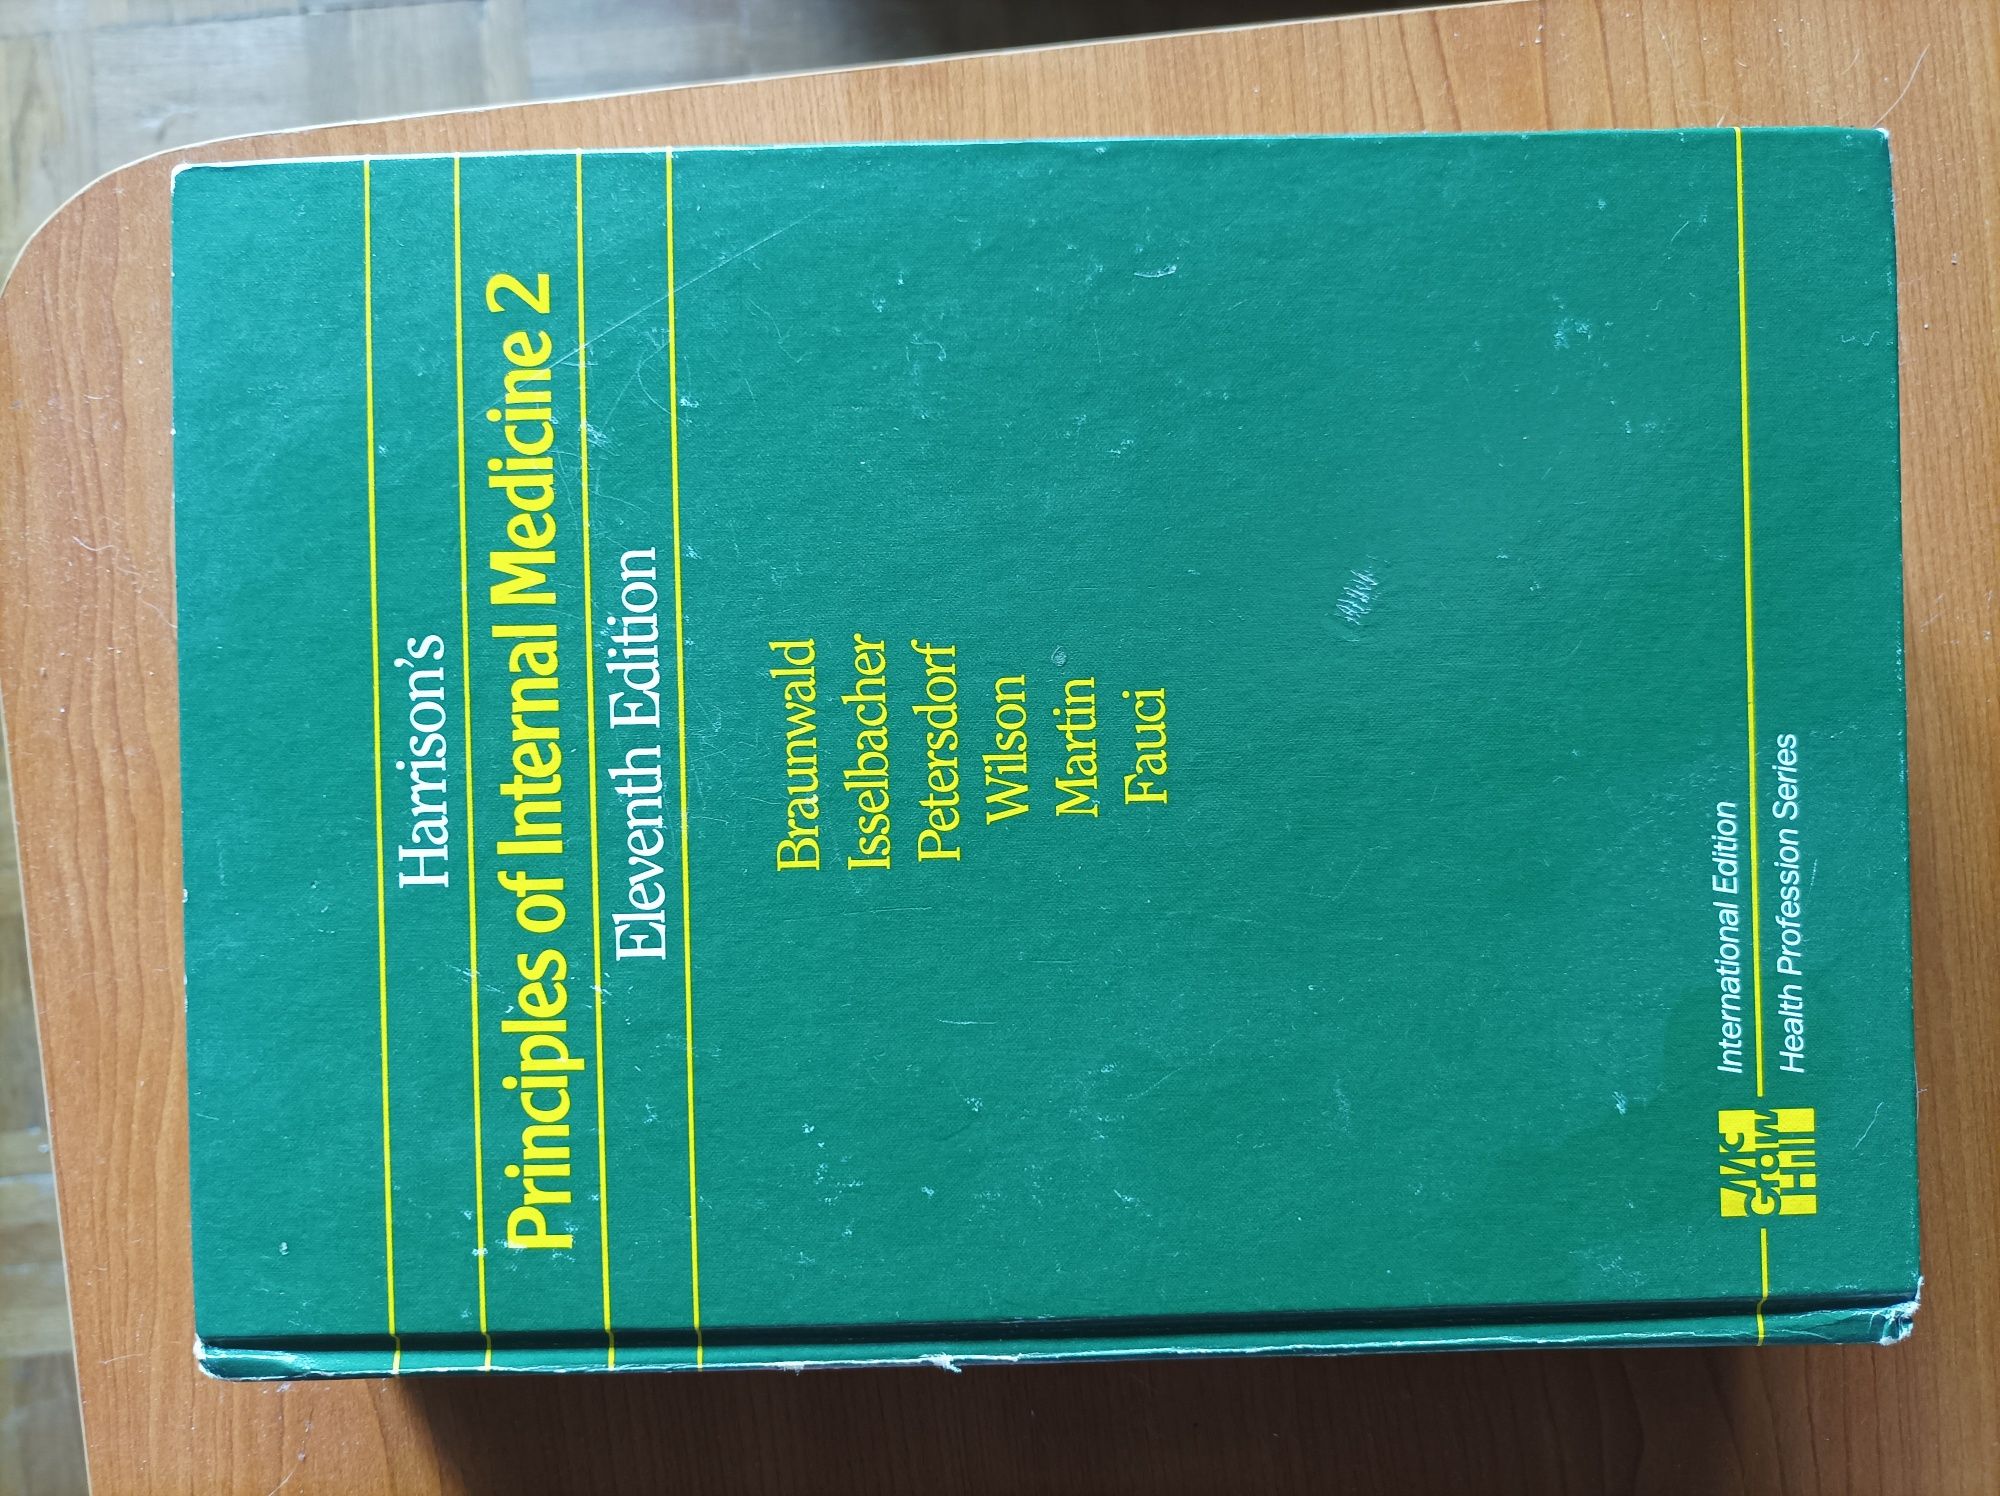 Harrison principles of internal medicine 11th edition